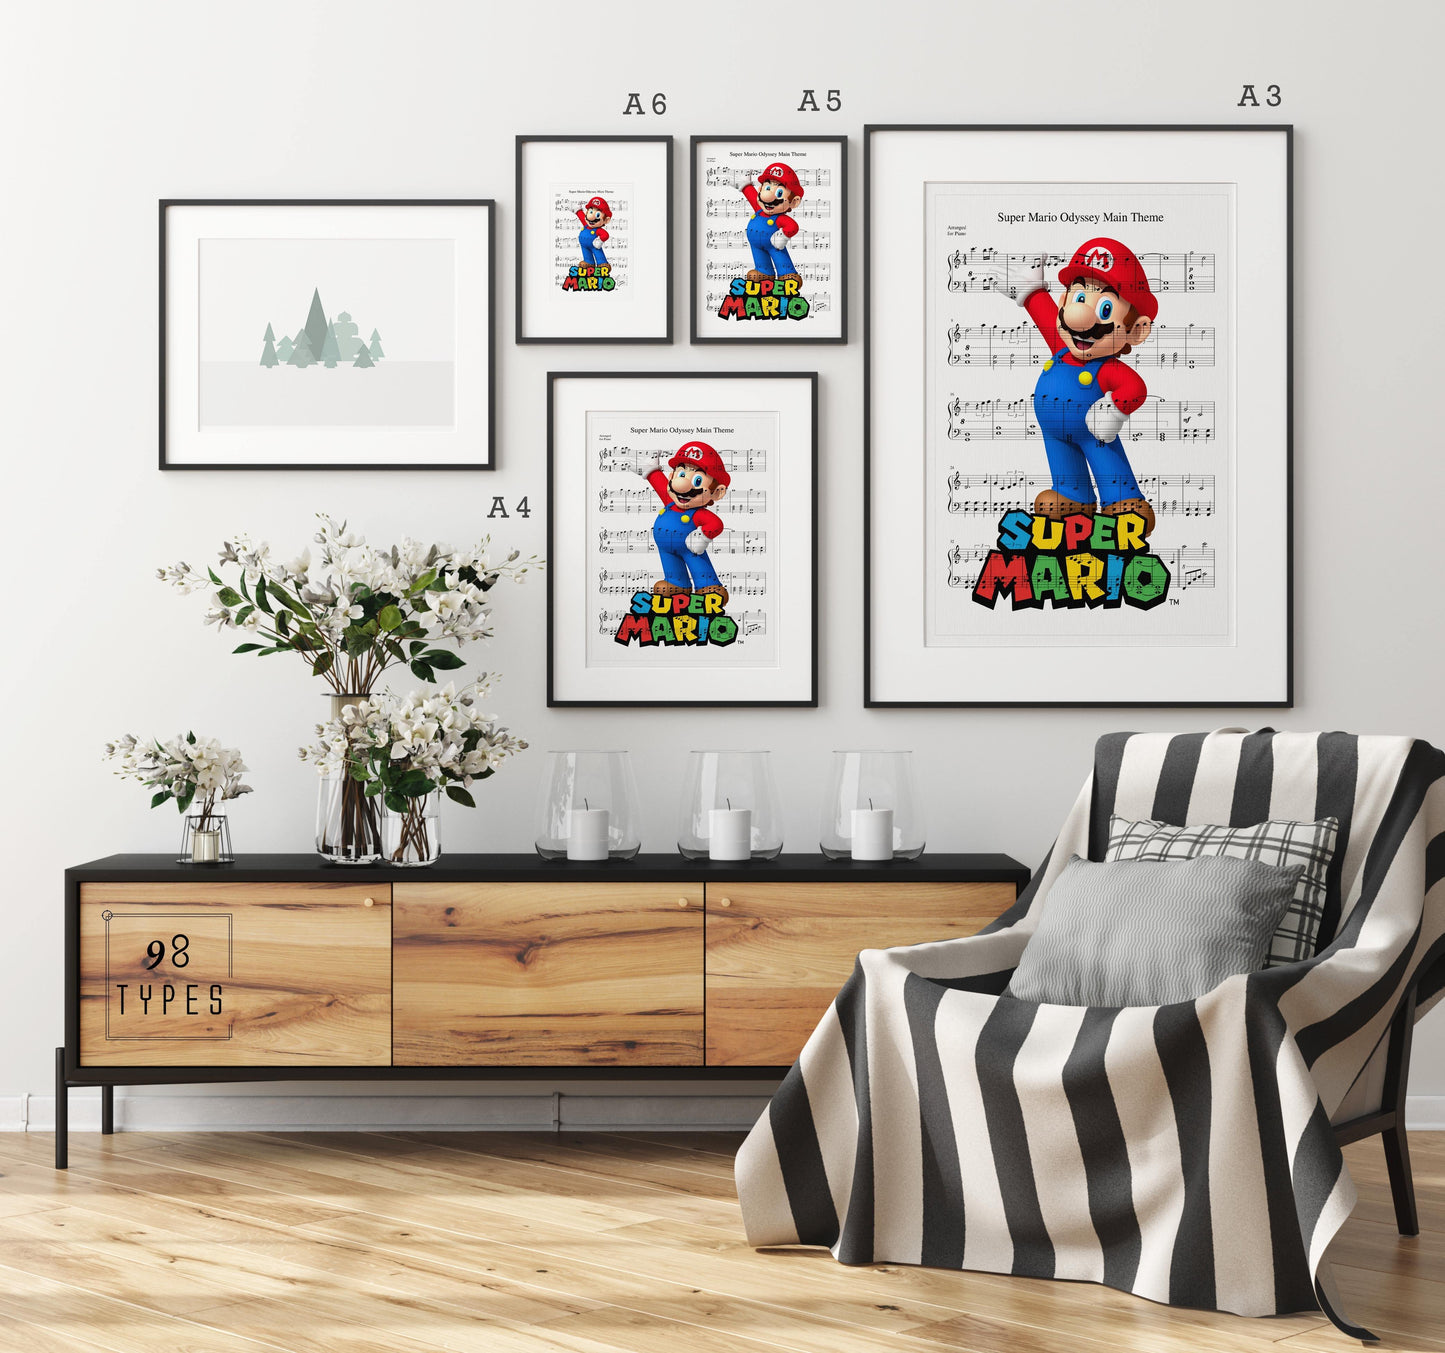 Super Mario Bros Theme Song Print | Sheet Music Wall Art | Song Music Sheet Notes Print - 98types